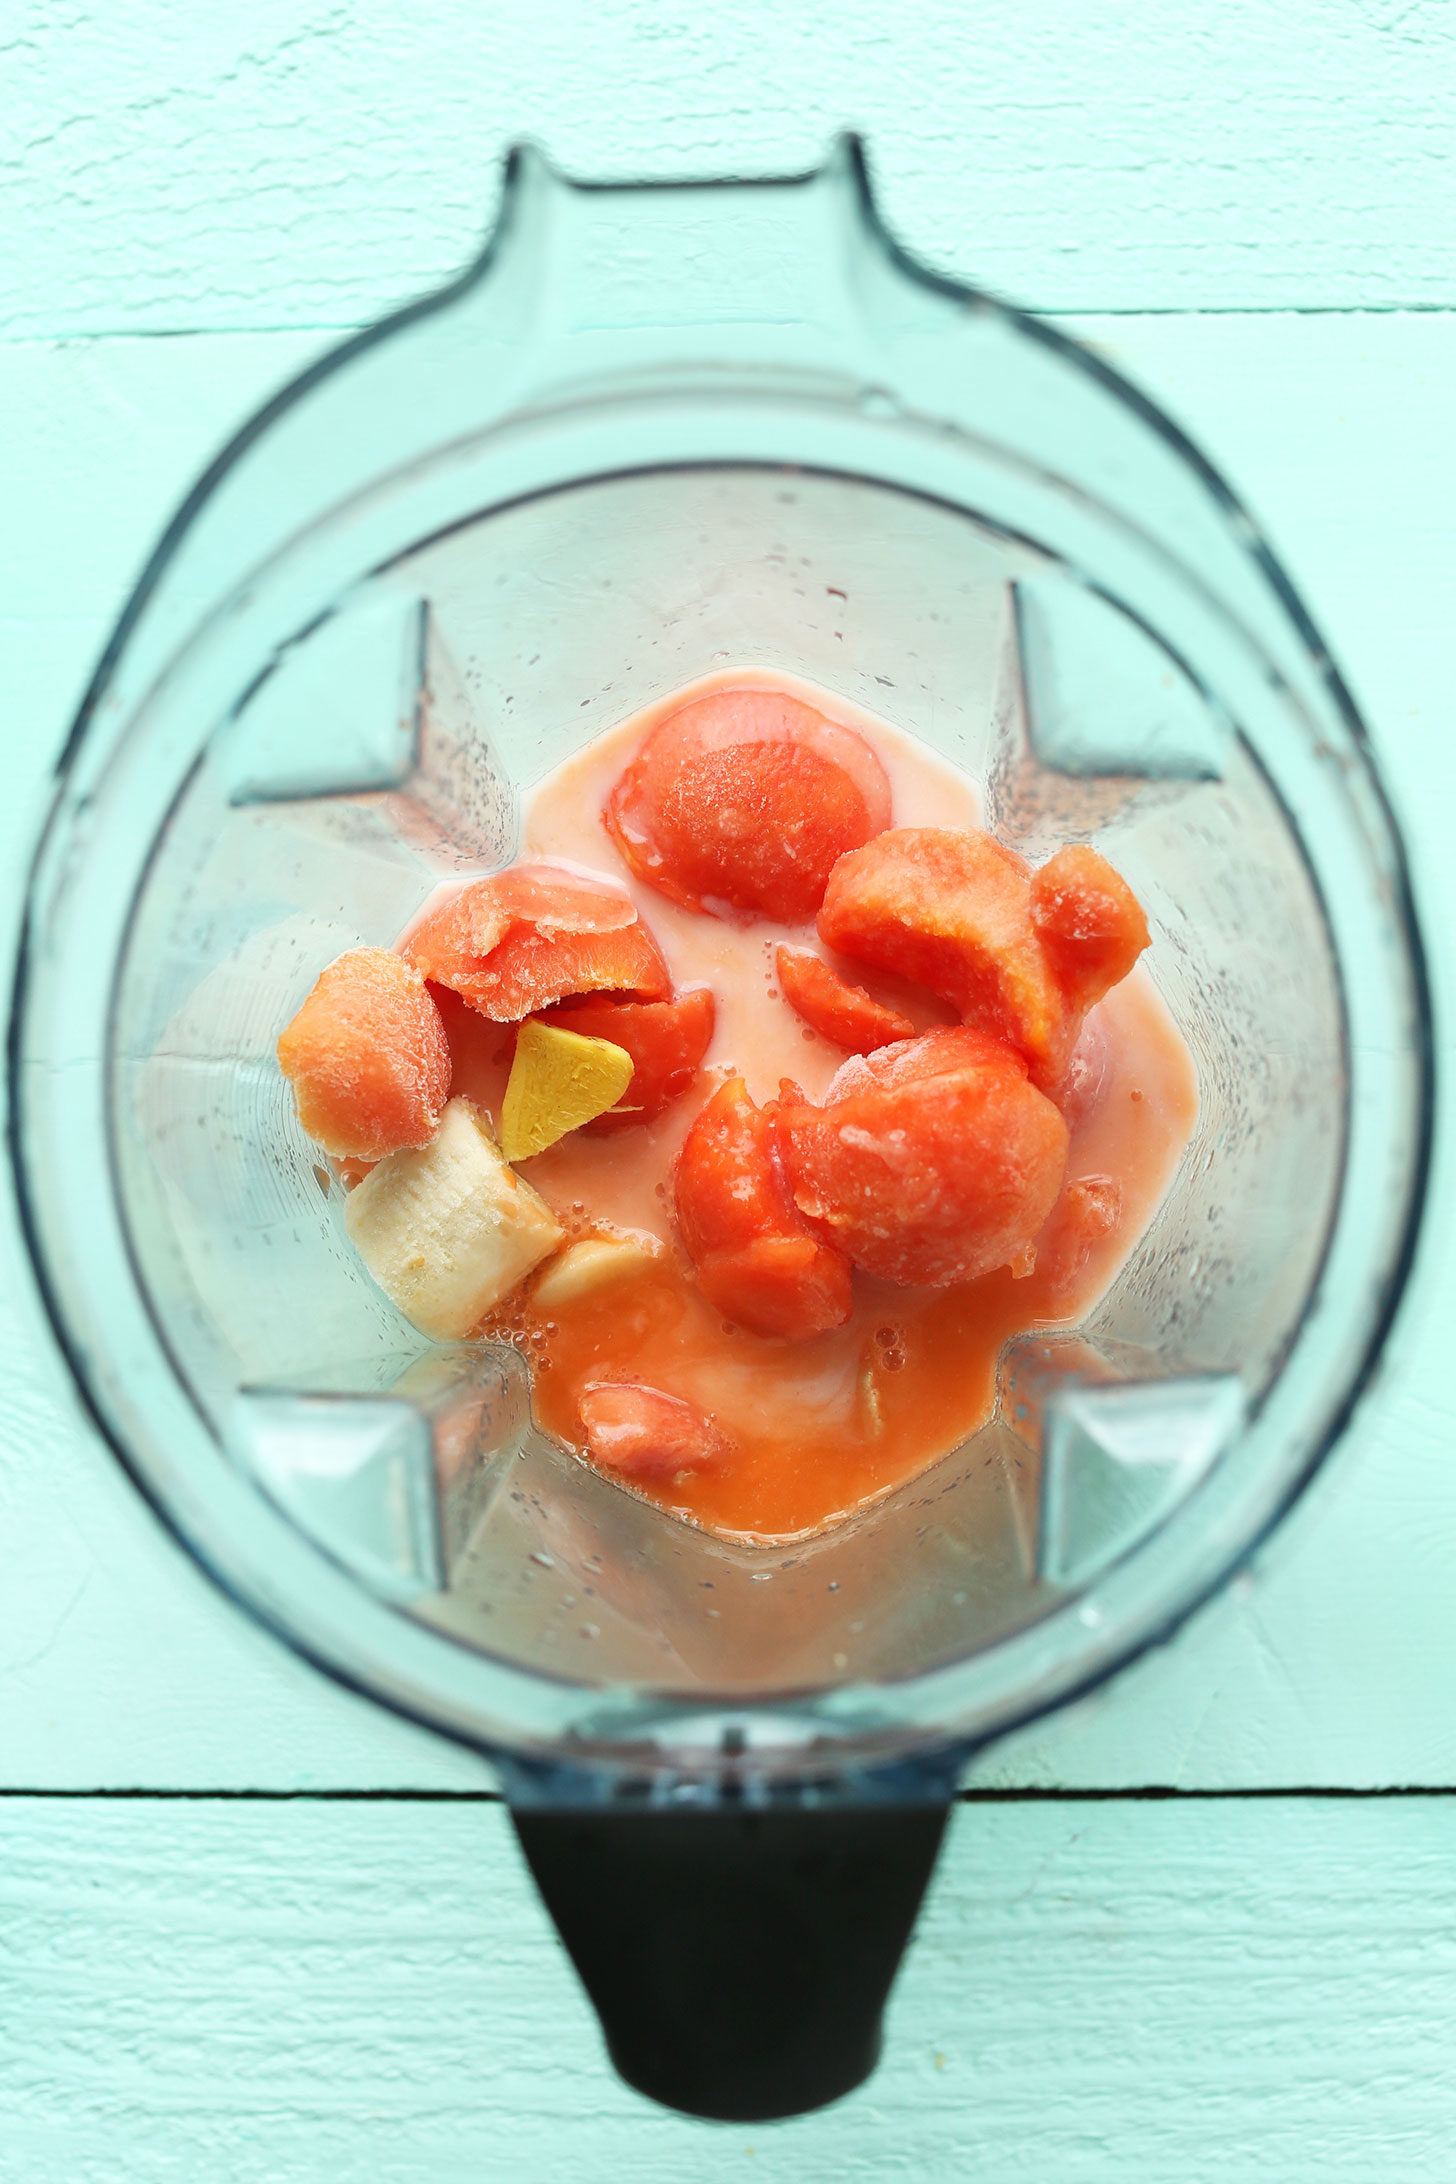 Blender with ingredients for making our refreshing Papaya Smoothie recipe